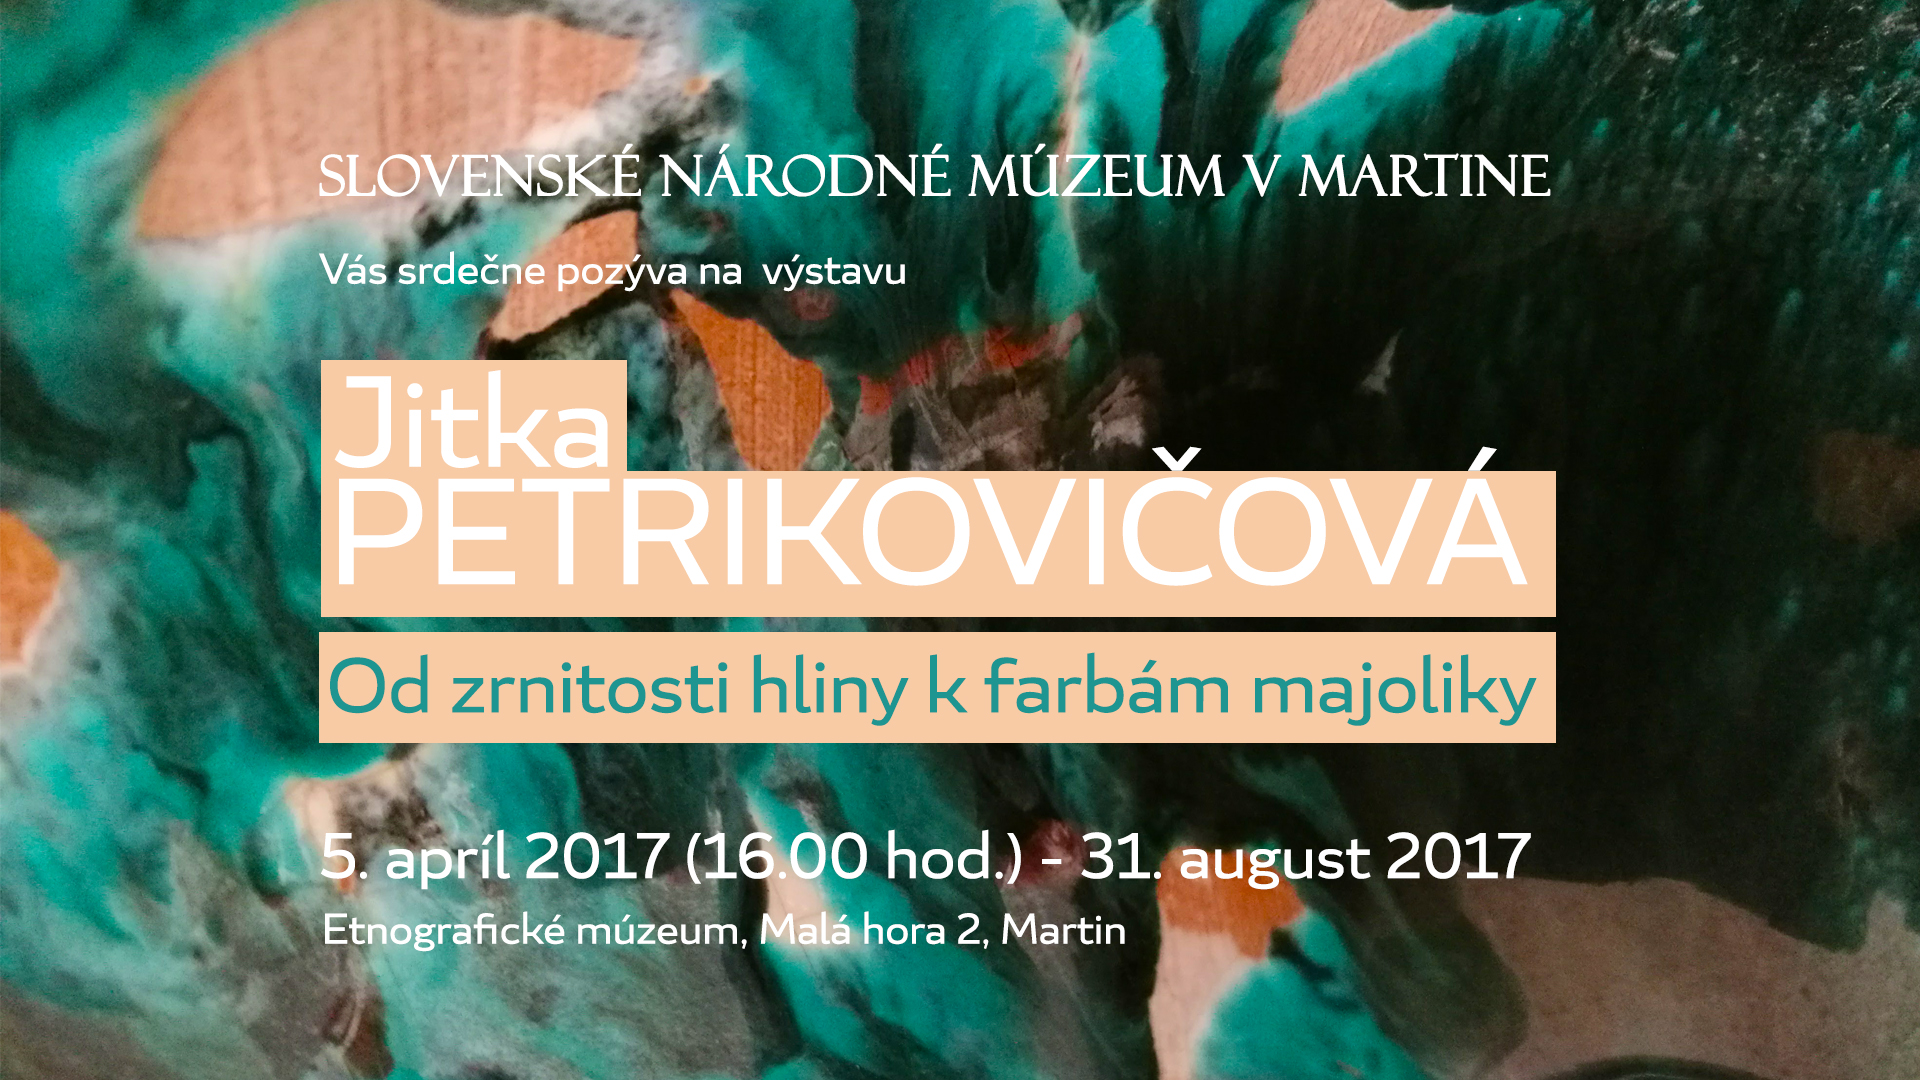 jitka petrikovicova od zrnitosti hliny k farbam majoliky Slovenske narodne muzeum v Martine